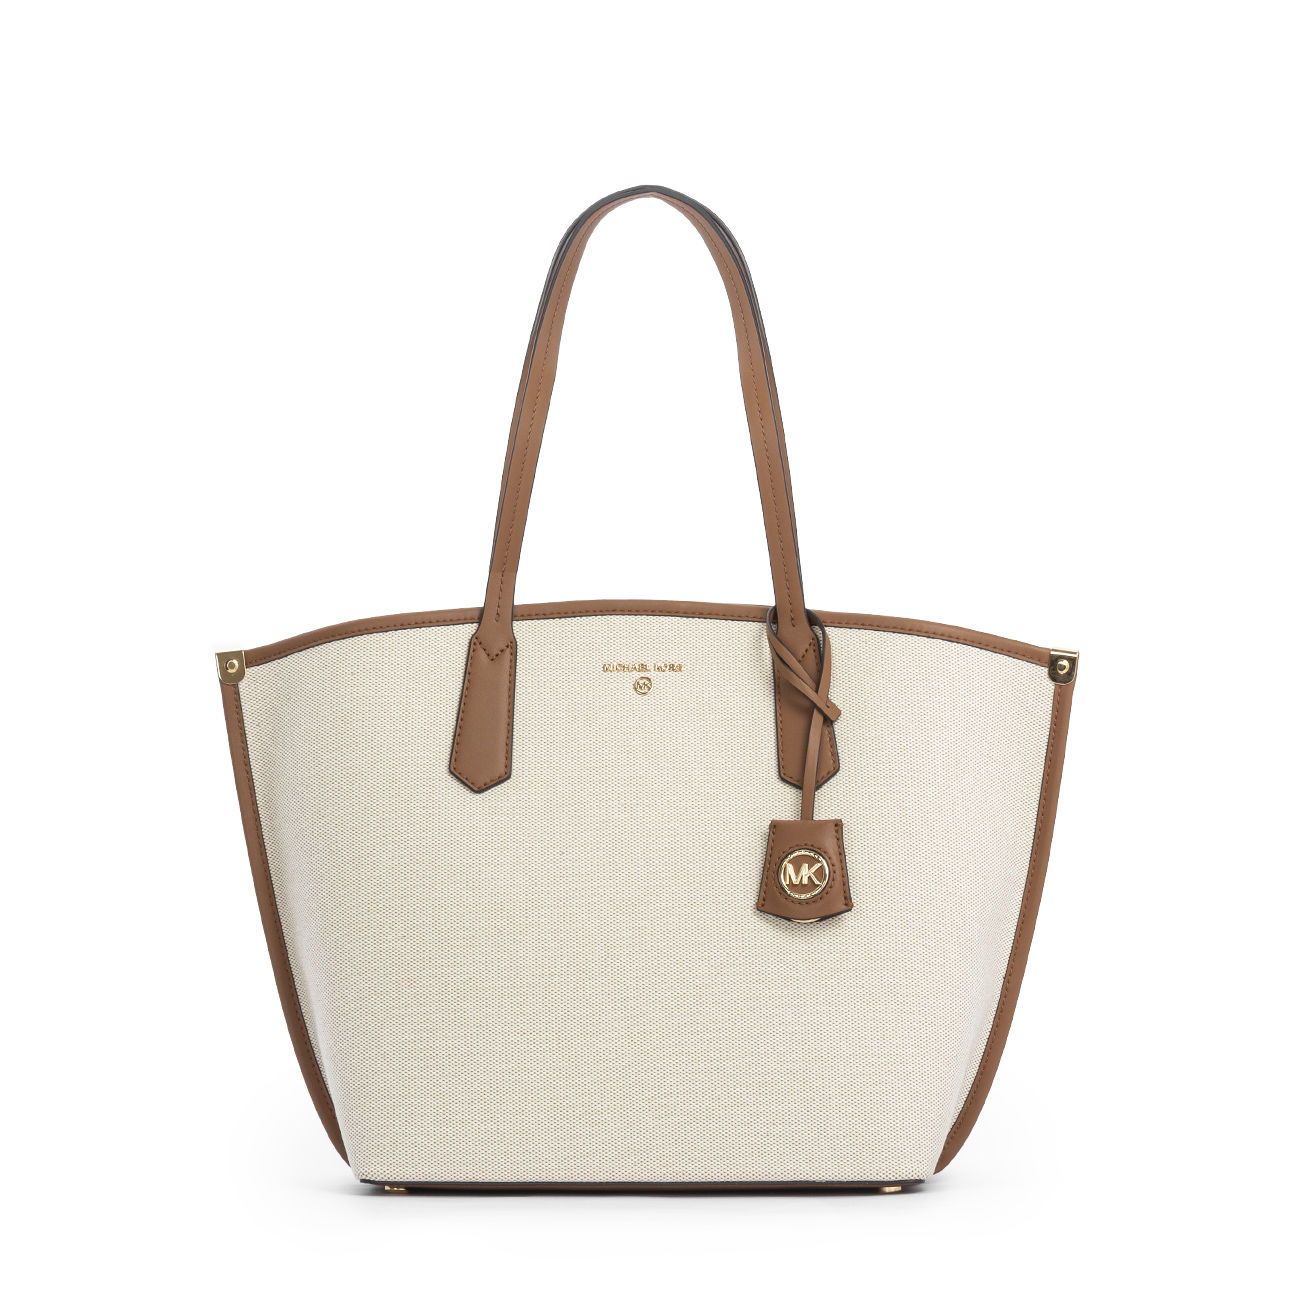  Michael Kors - Pinks / Women's Tote Handbags / Women's  Handbags, Purses & Wallet: Clothing, Shoes & Jewelry